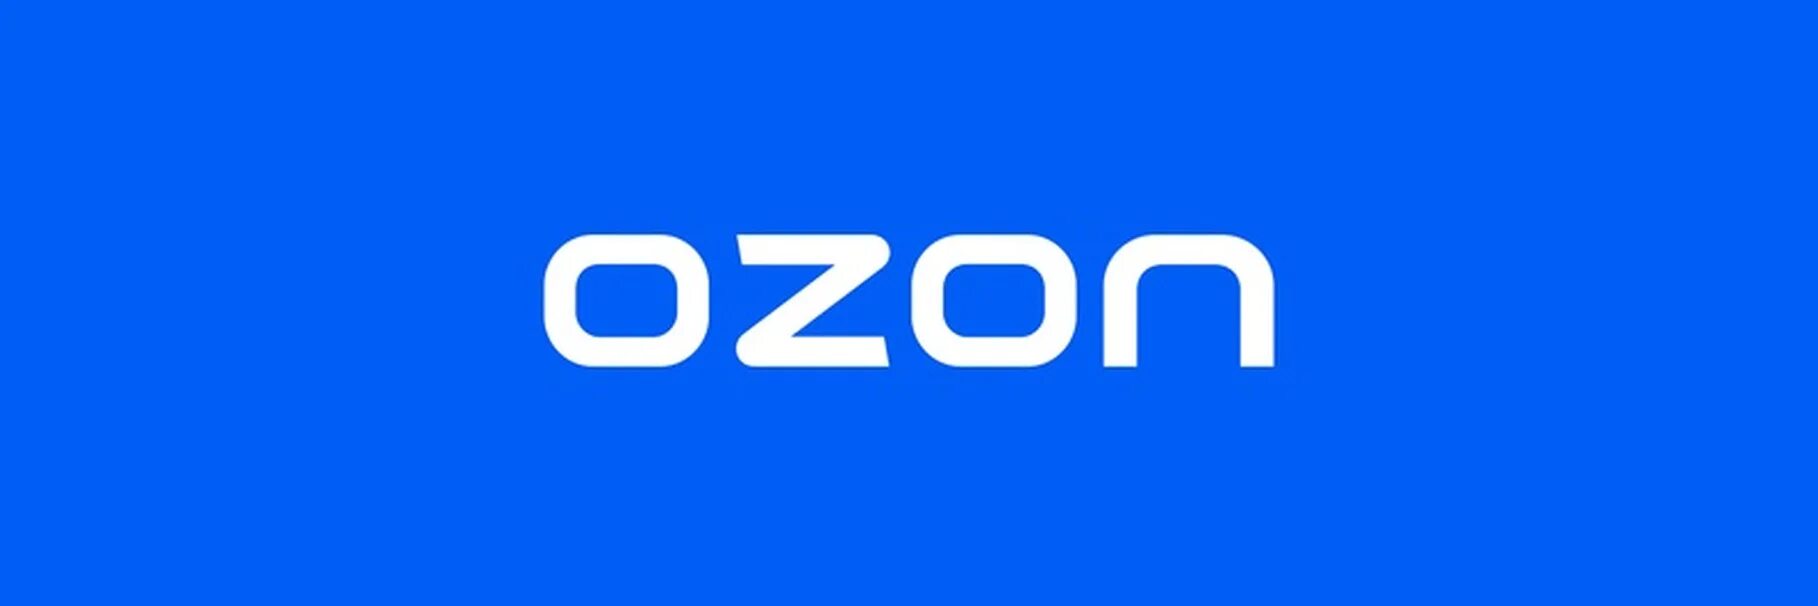 Озон бади. Озон логотип. Надпись Озон. Магазин Озон логотип. Логотип Озон квадратный.